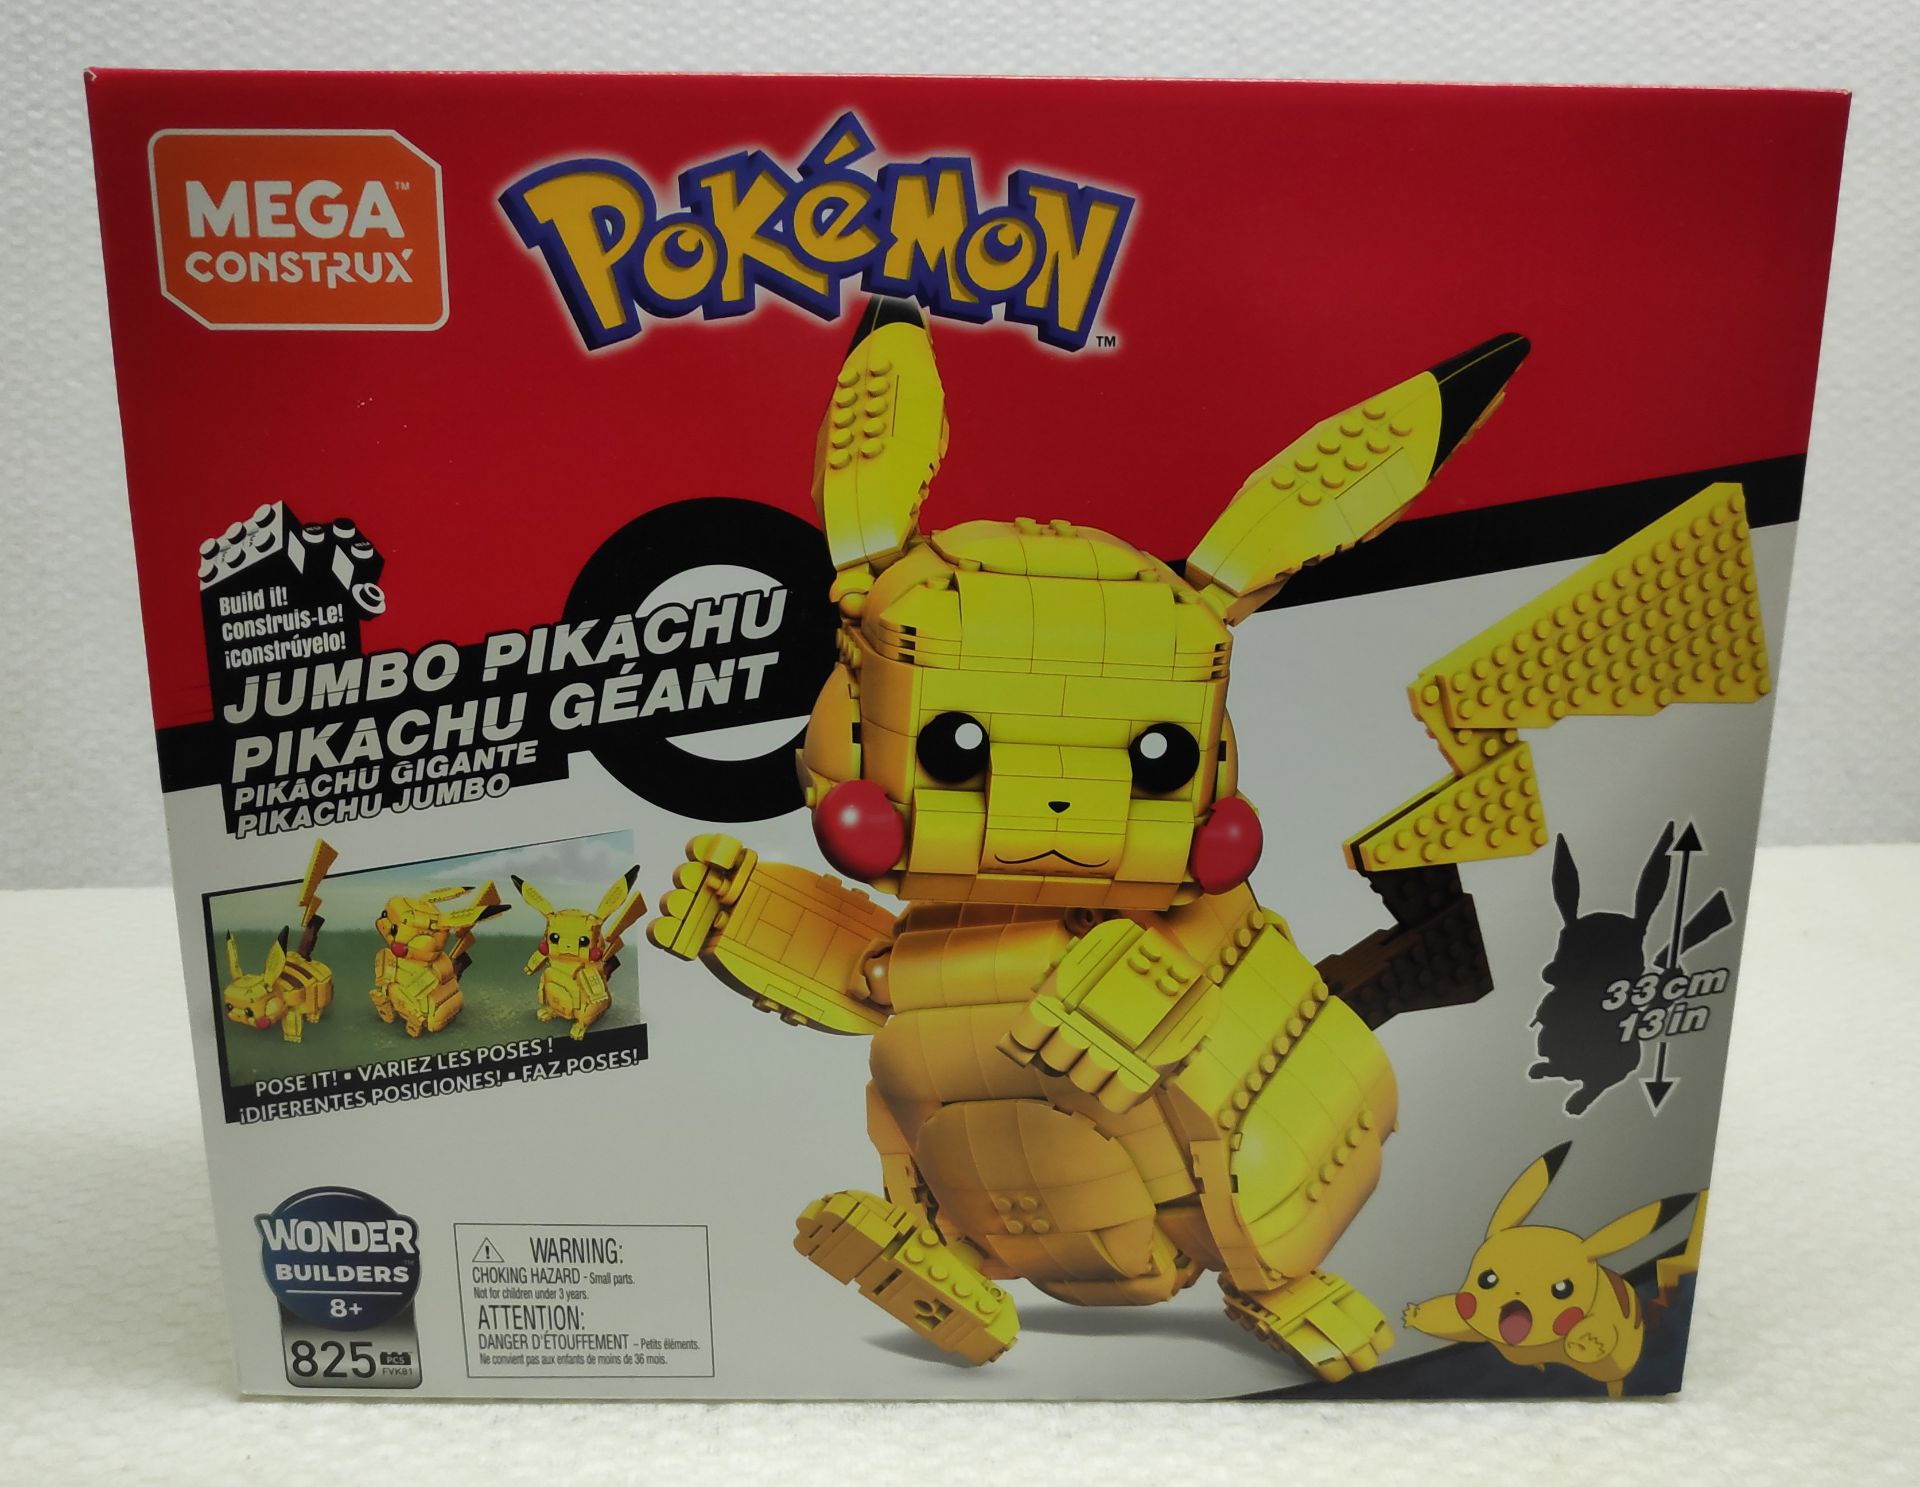 1 x Pokemon Mega Construx Jumbo Pikachu Lego-Style Building Set - New/Boxed